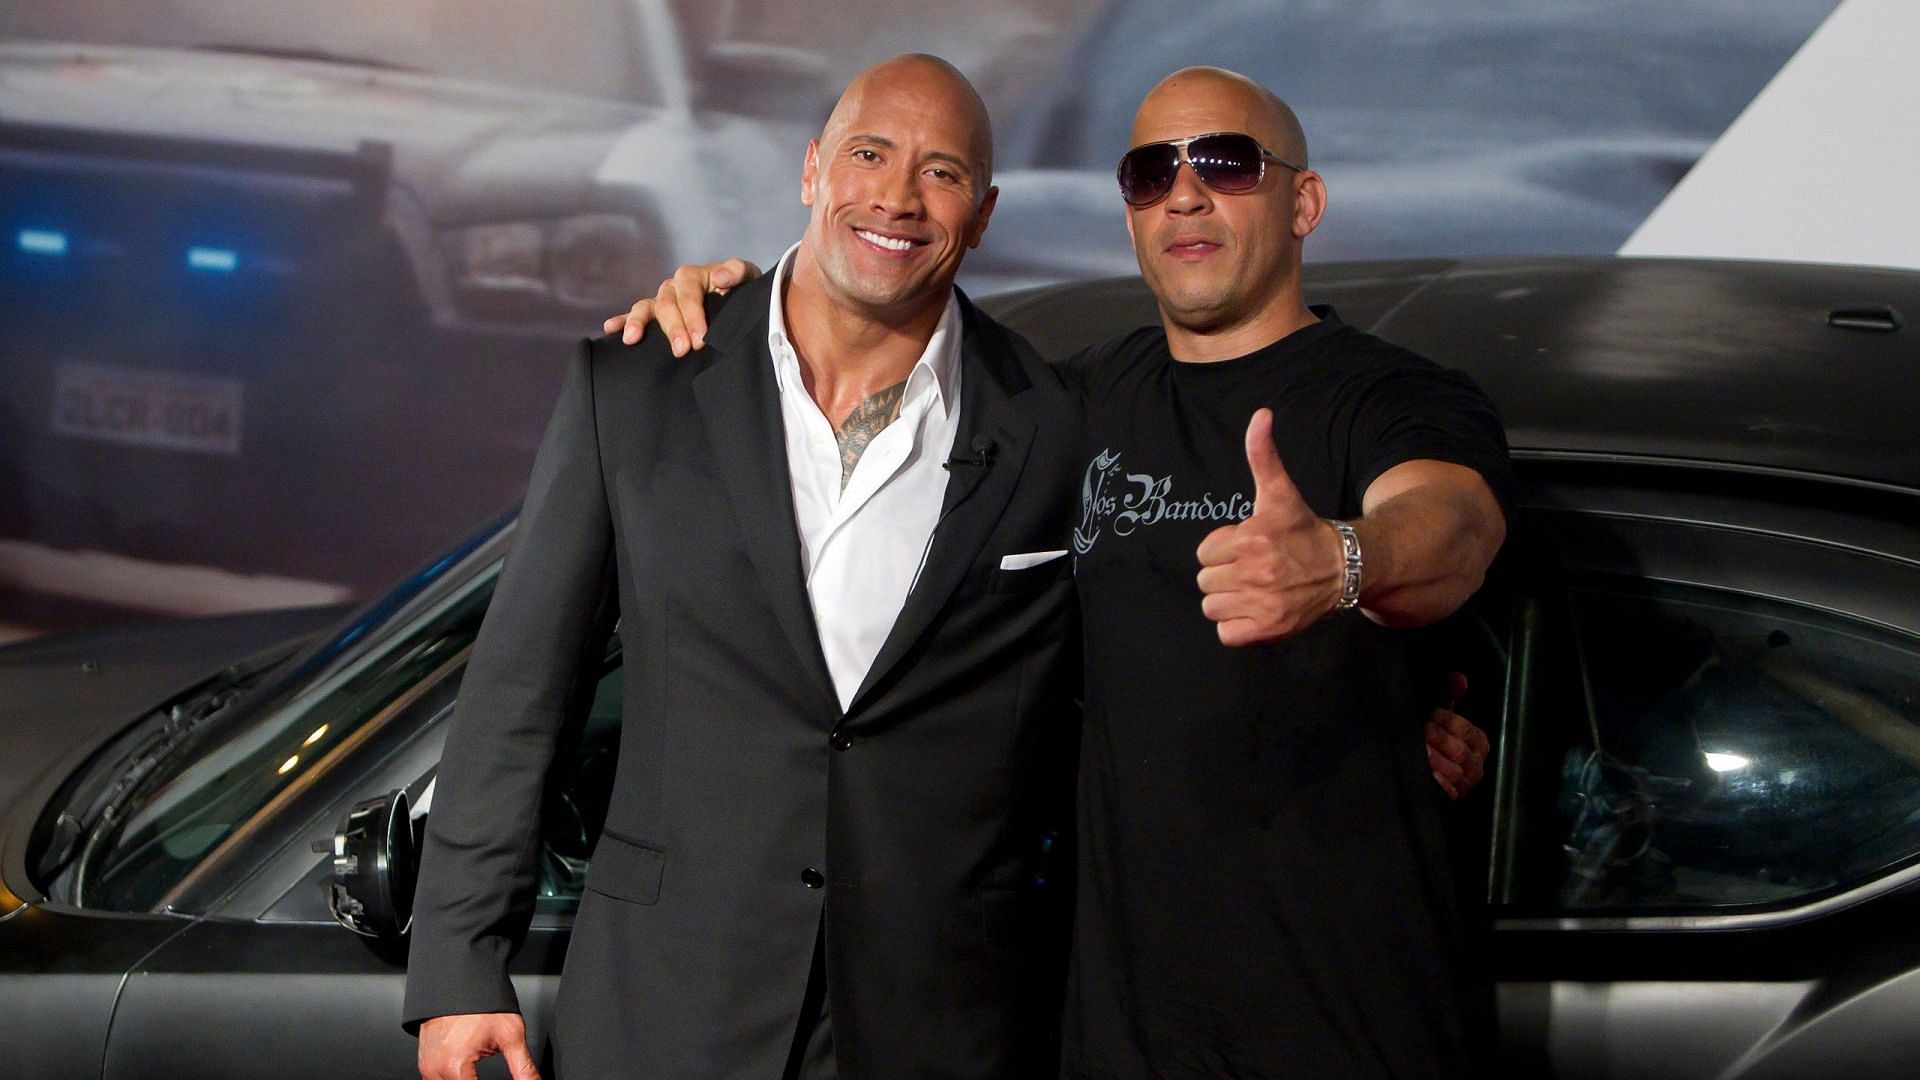 Dwayne Johnson and Vin Diesel in 2011 (Image via Getty Images/Buda Mendes)